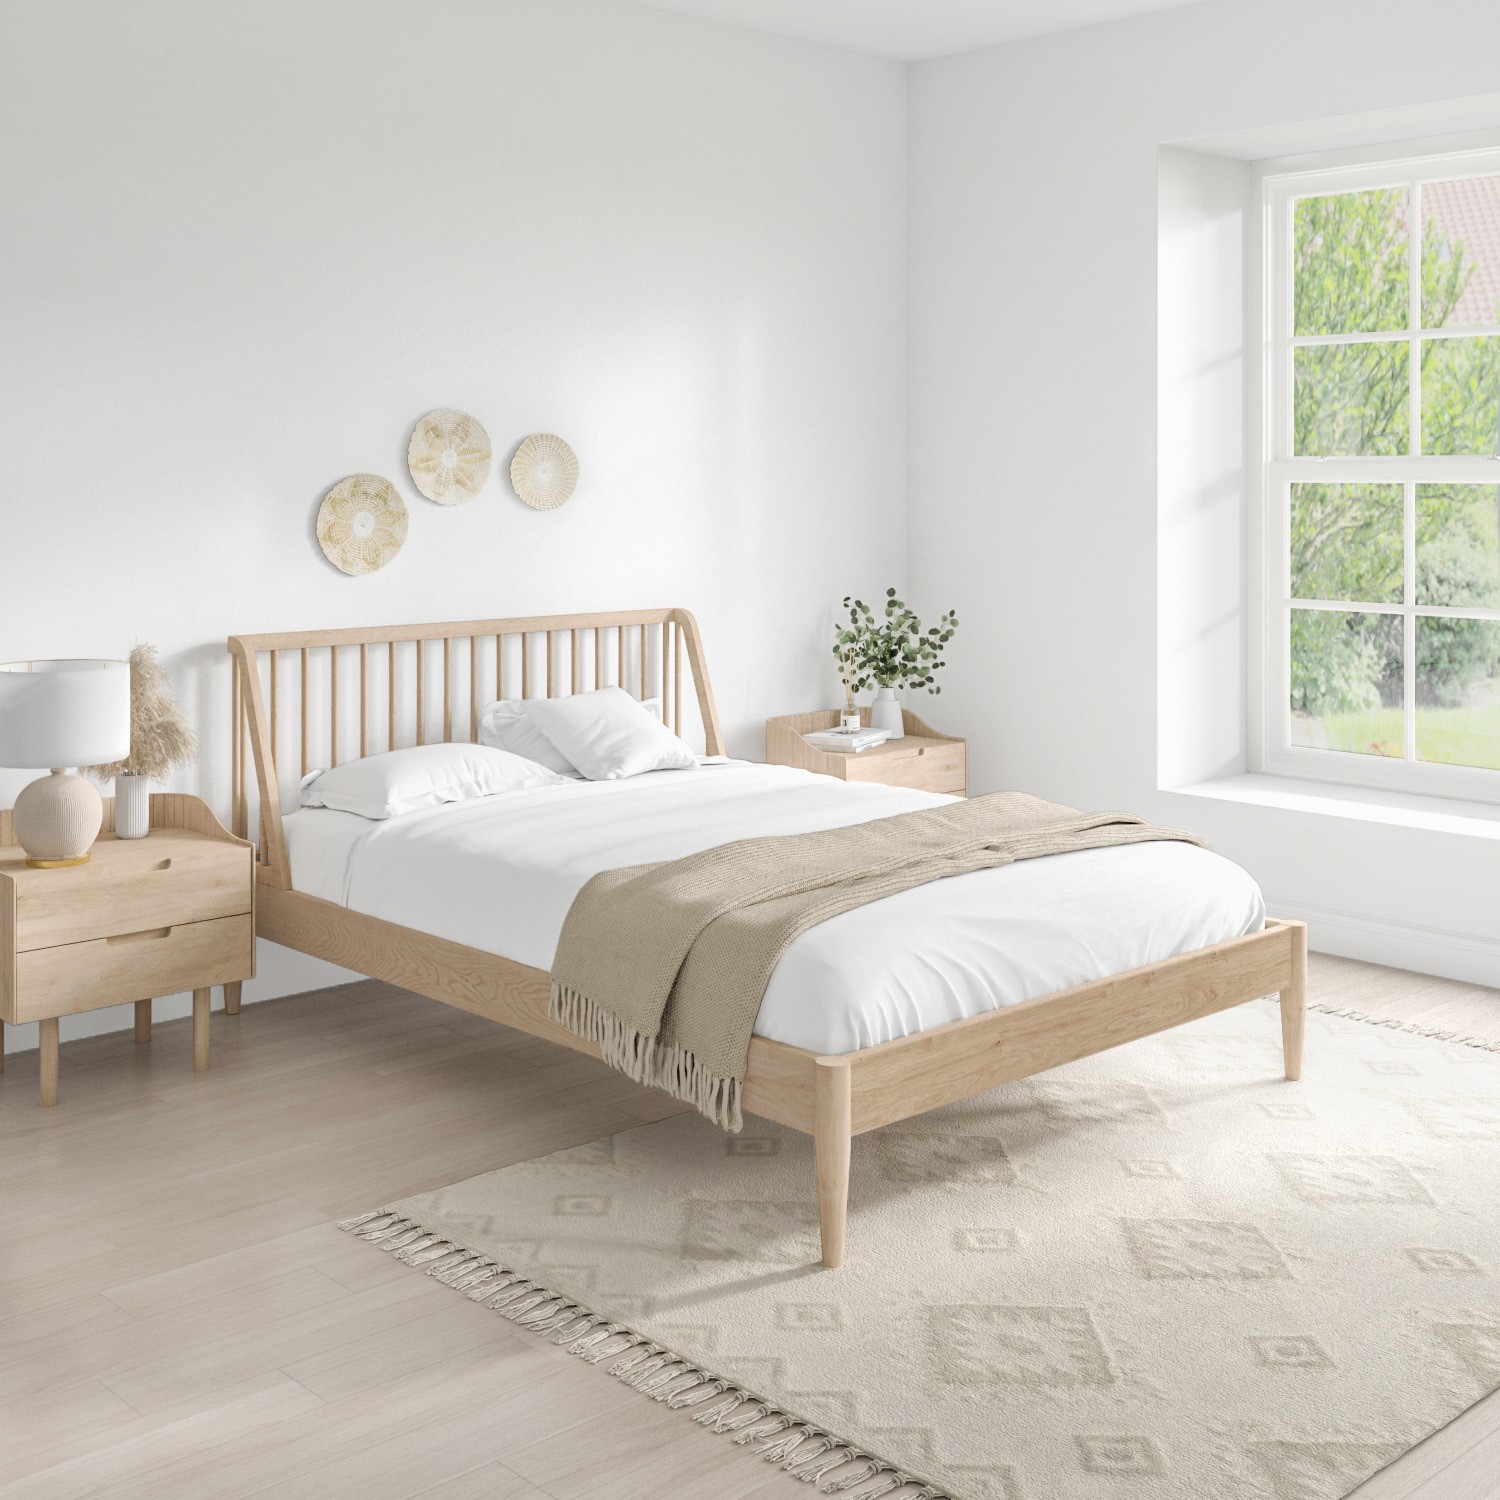 Photo of Wooden spindle mid century king size bed frame - saskia